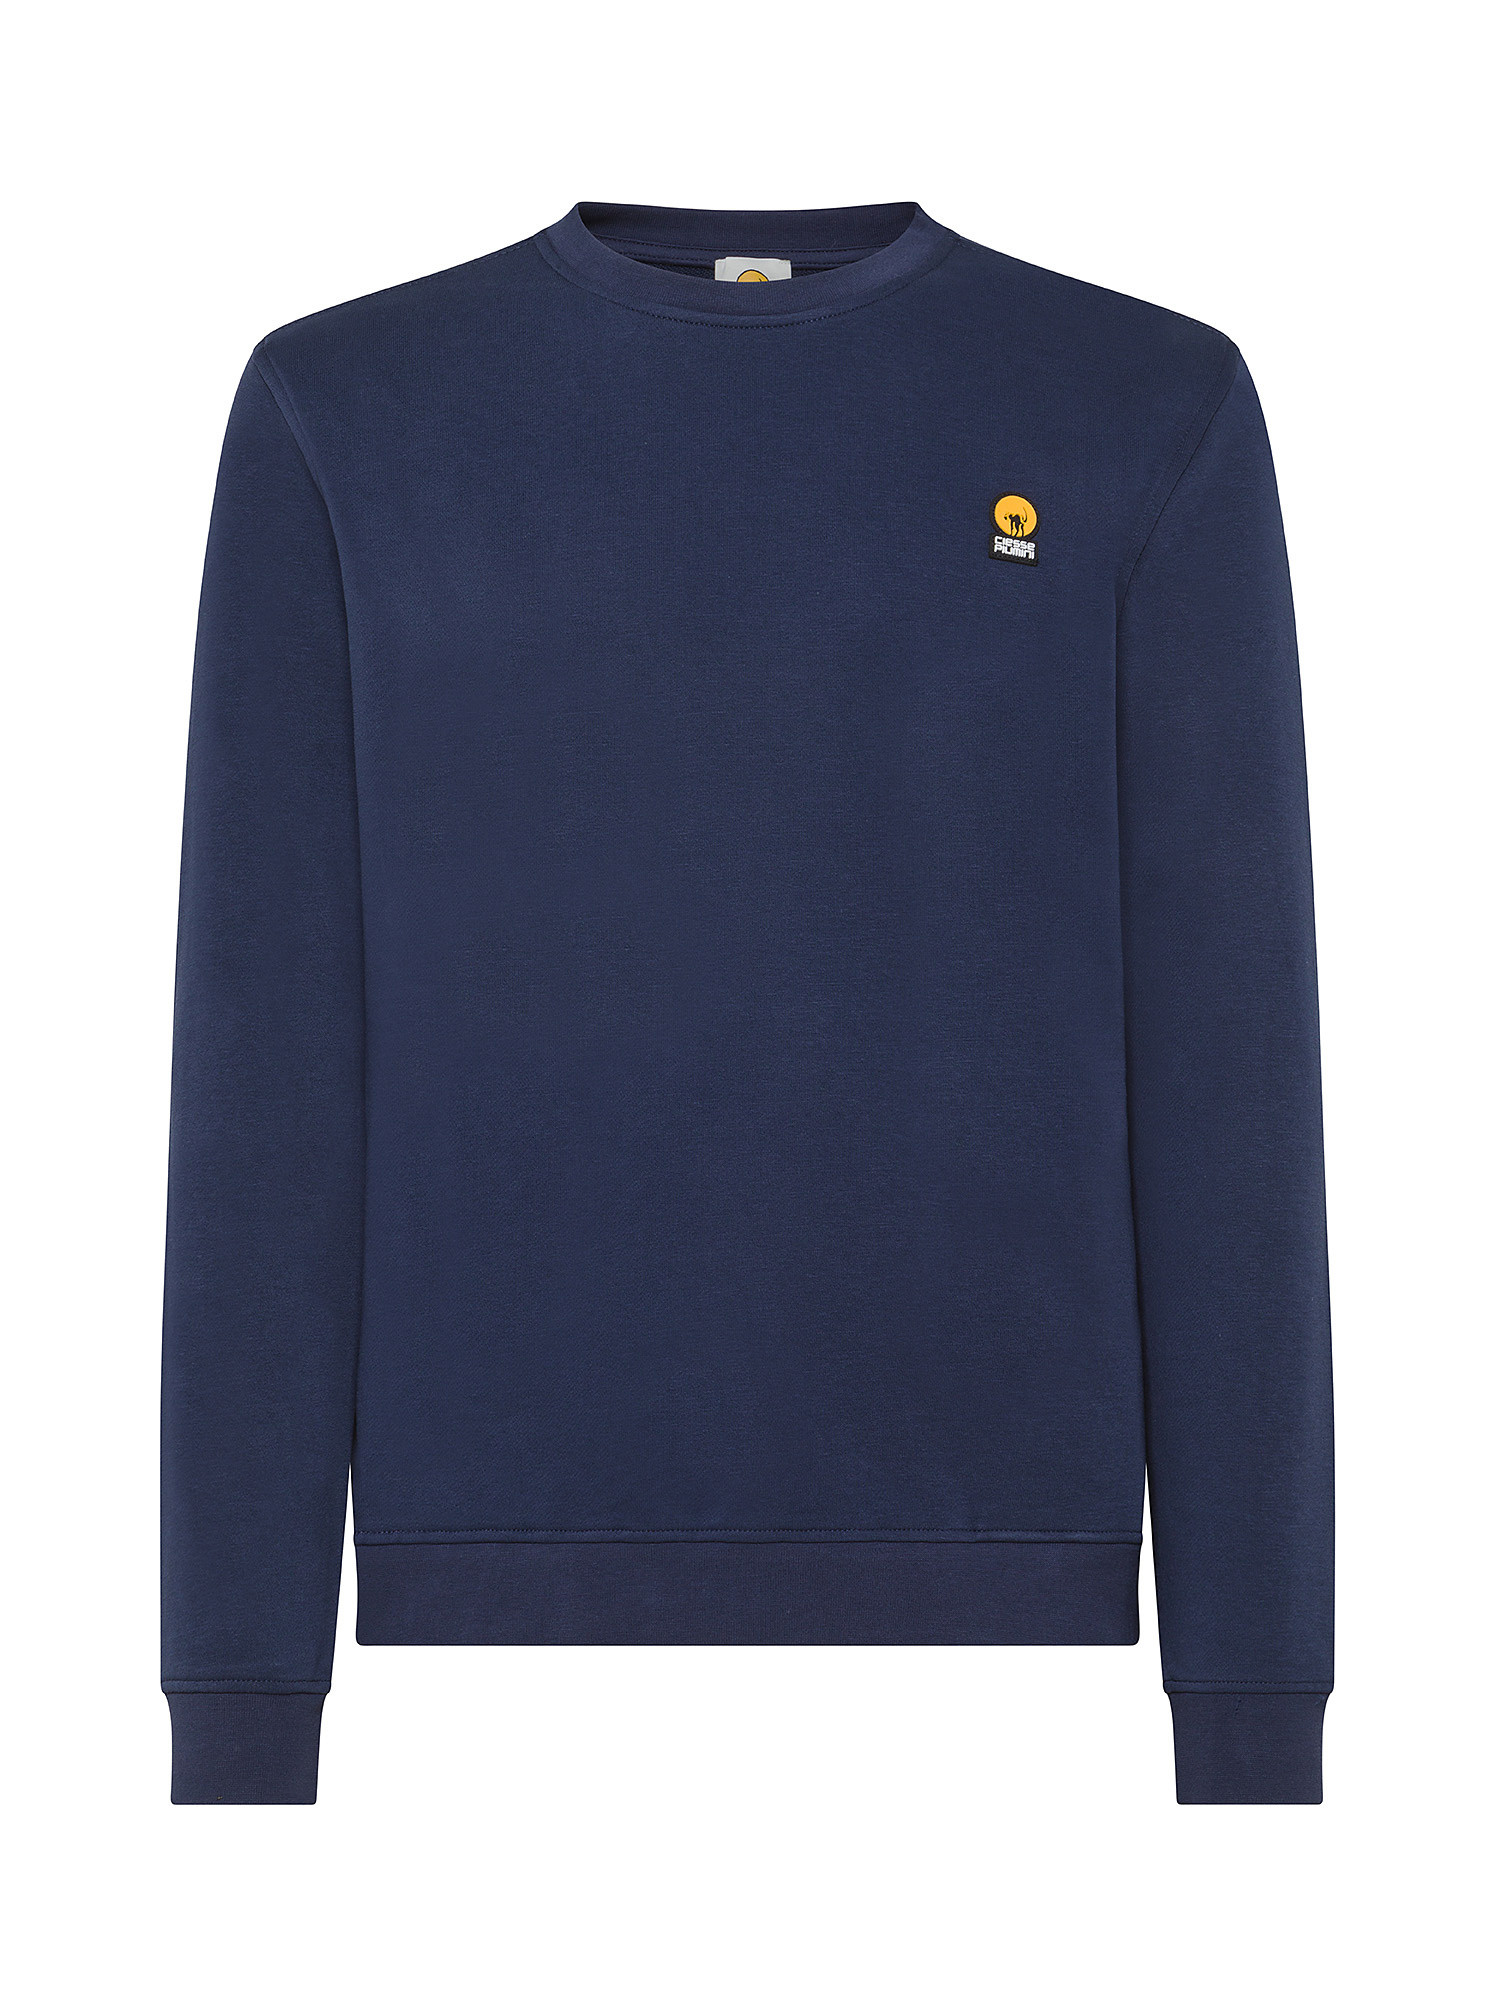 Ciesse Piumini - Flea sweatshirt in cotton blend with logo, Blue, large image number 0